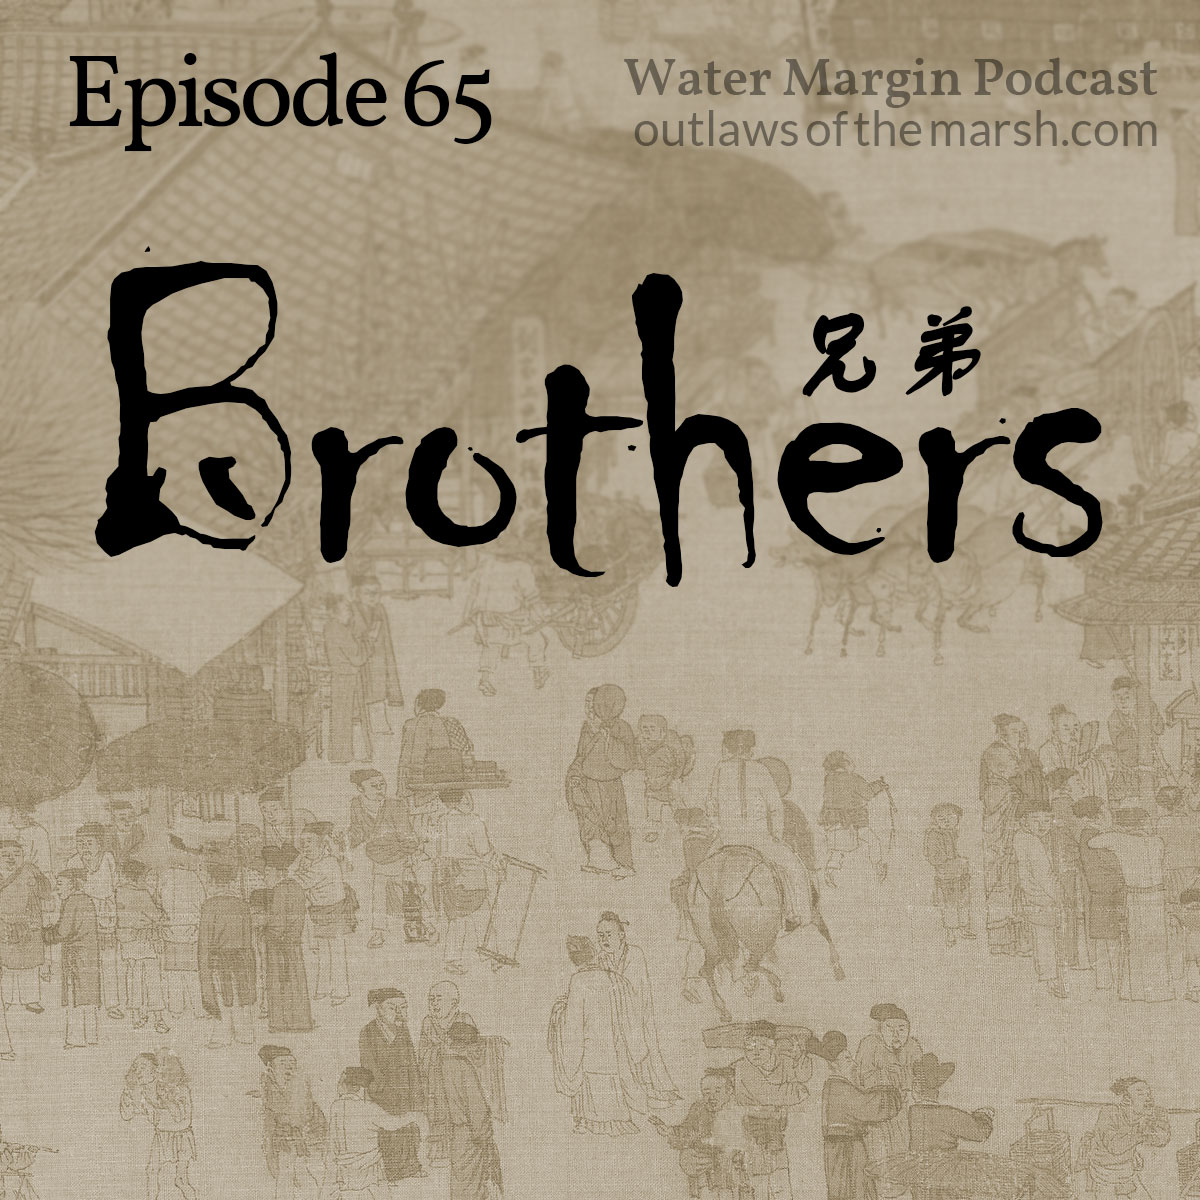 Water Margin Podcast: Episode 065